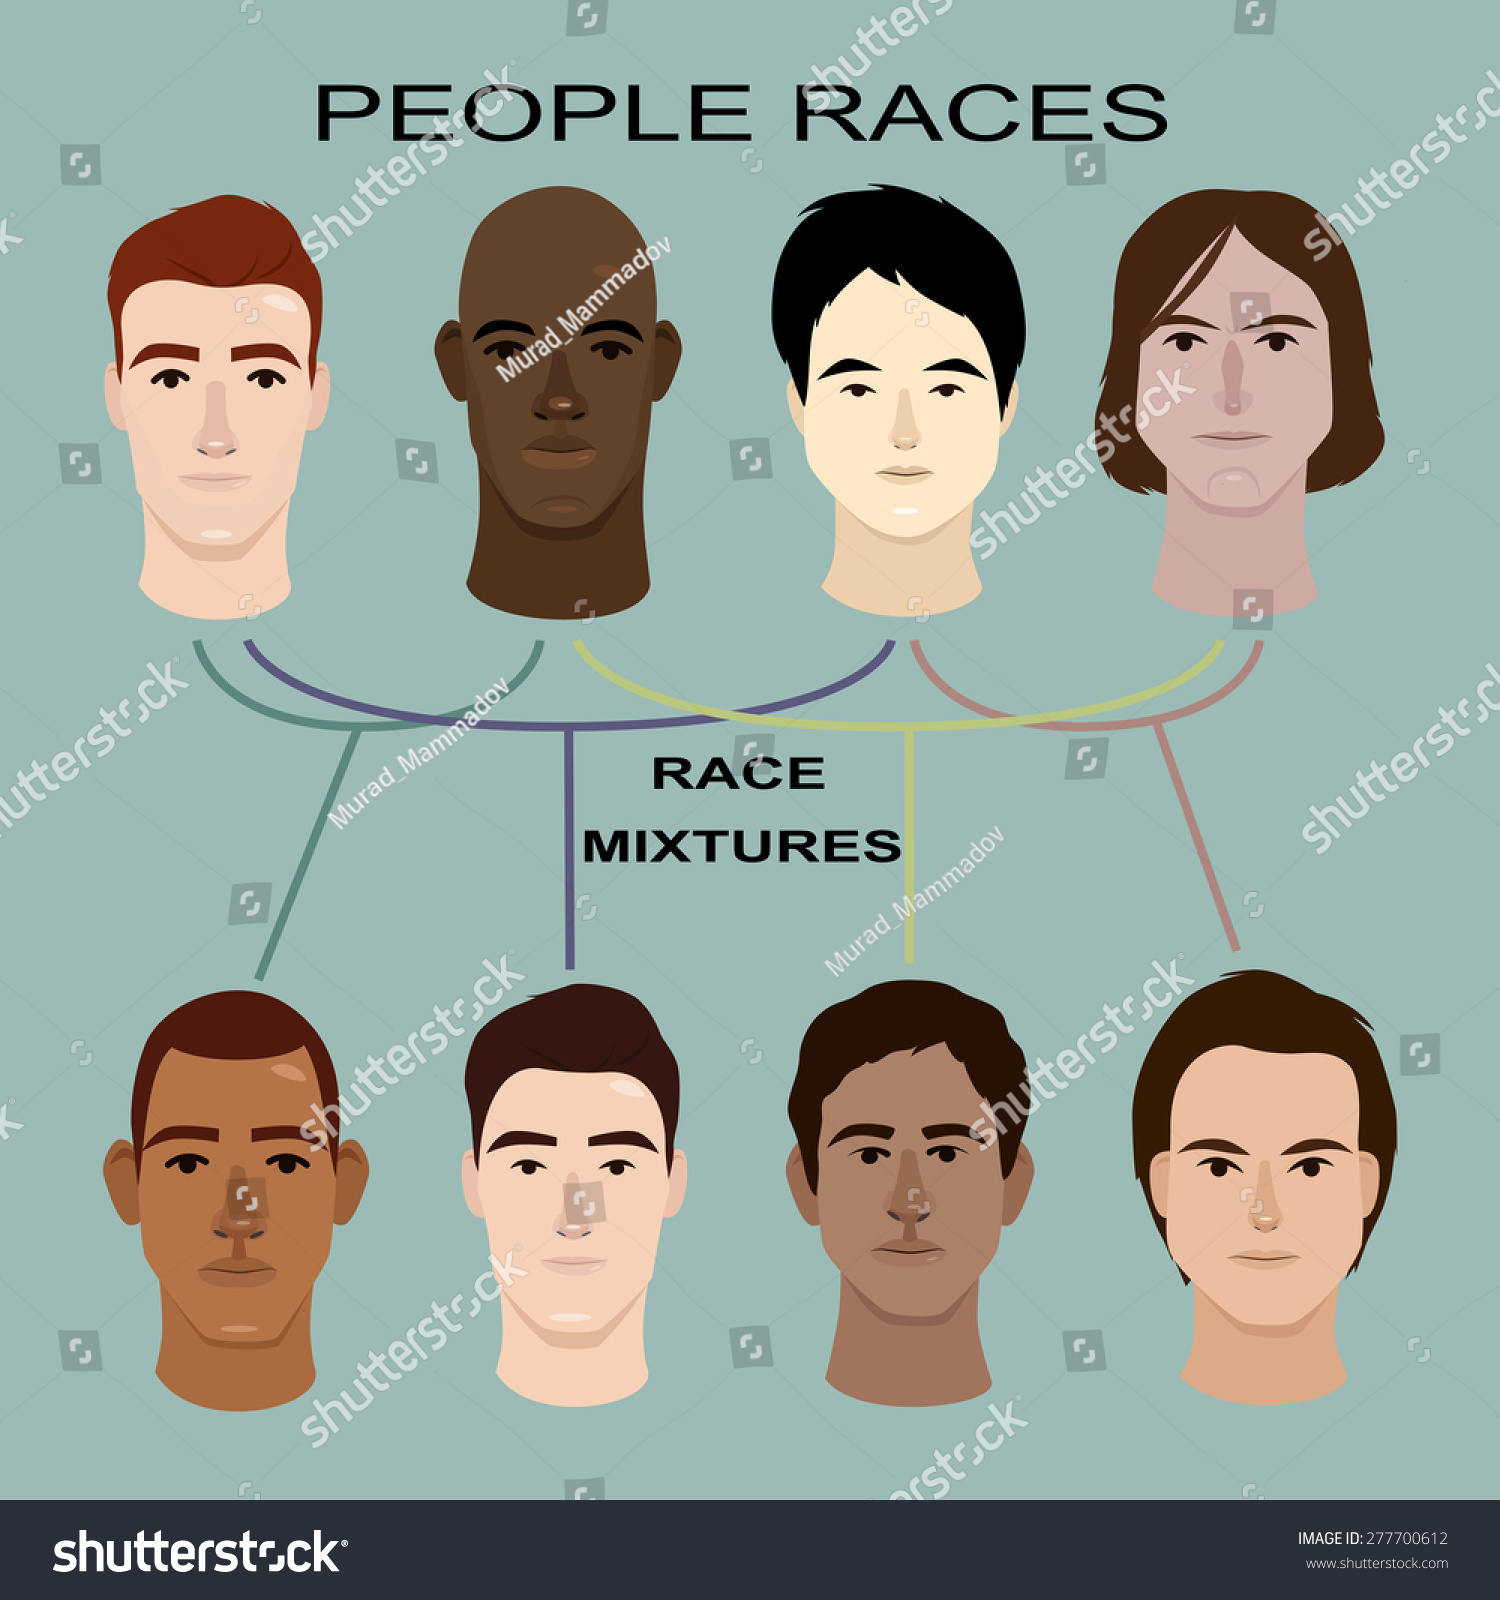 The three human races